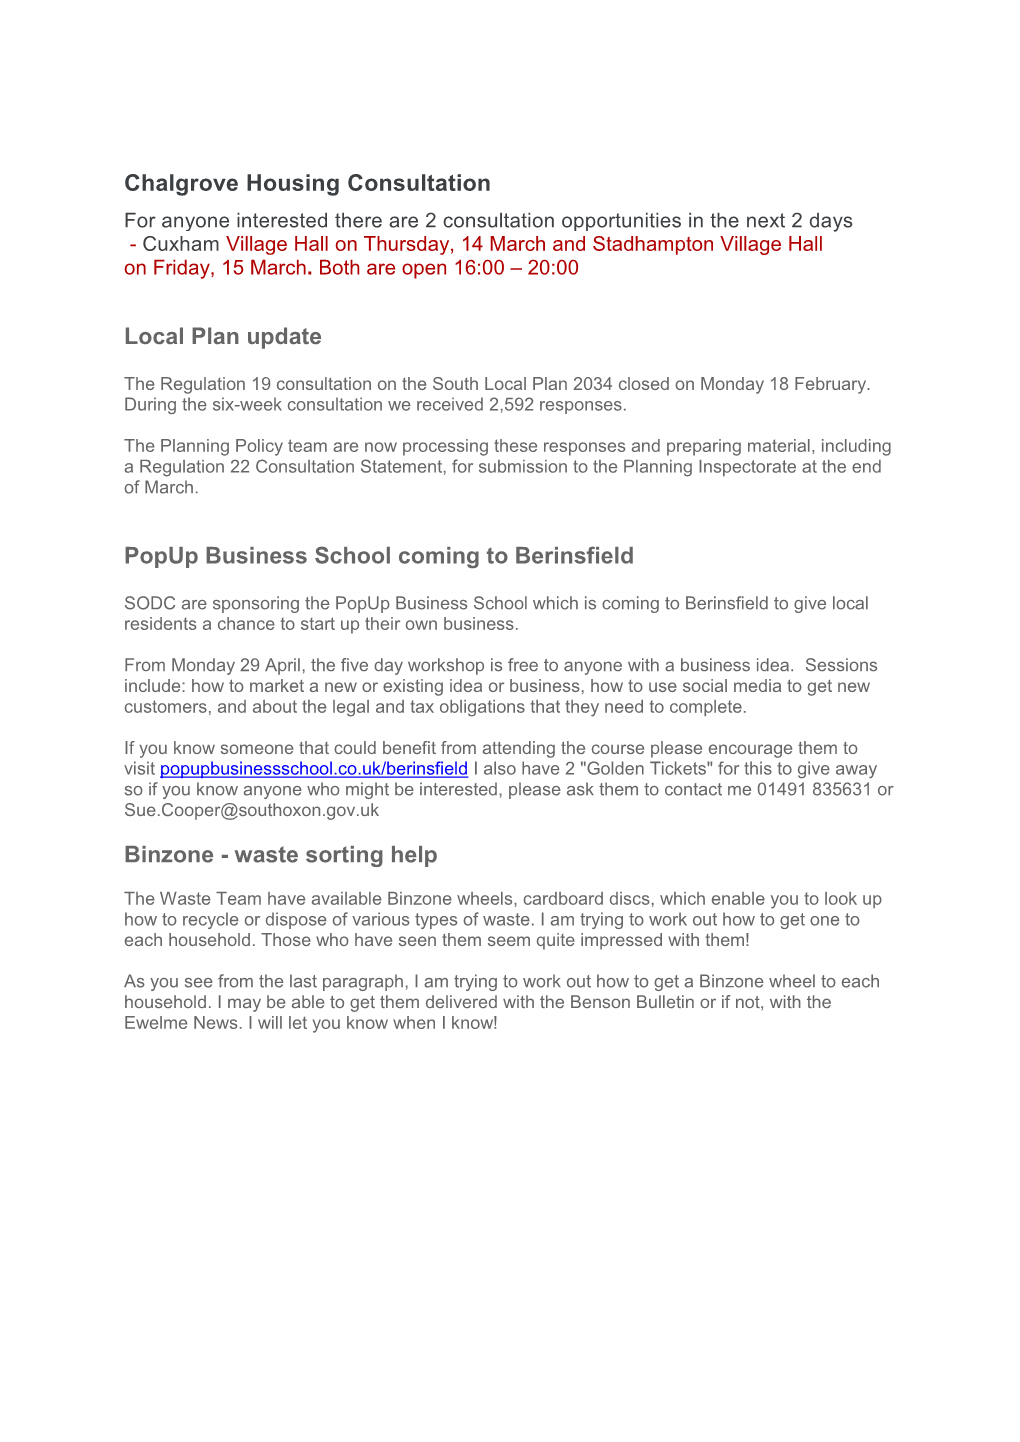 Chalgrove Housing Consultation Local Plan Update Popup Business School Coming to Berinsfield Binzone